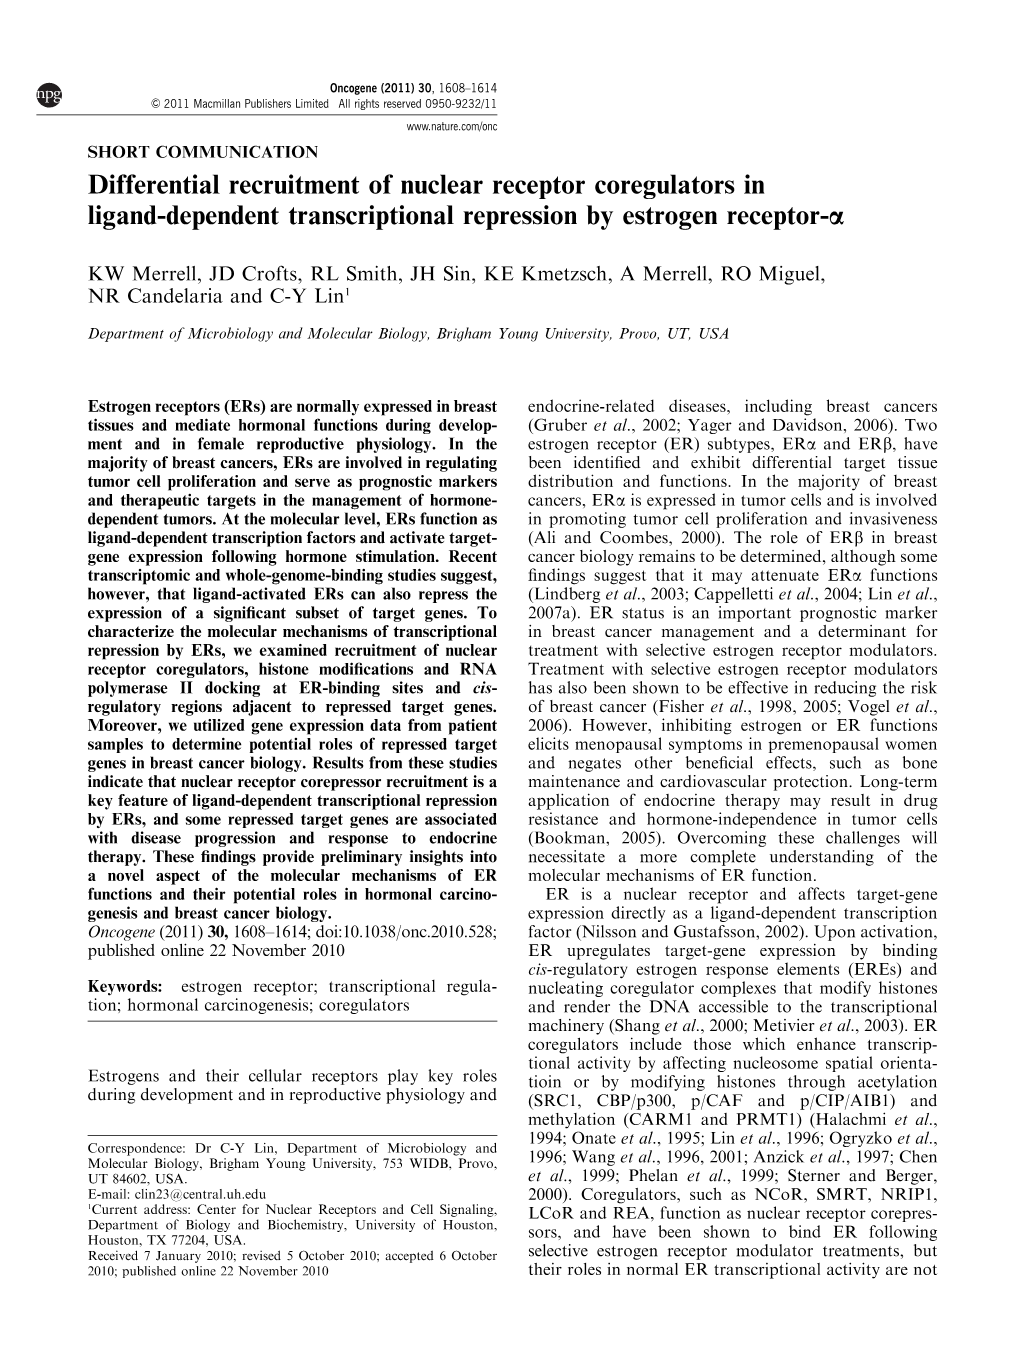 Differential Recruitment of Nuclear Receptor Coregulators in Ligand-Dependent Transcriptional Repression by Estrogen Receptor-A